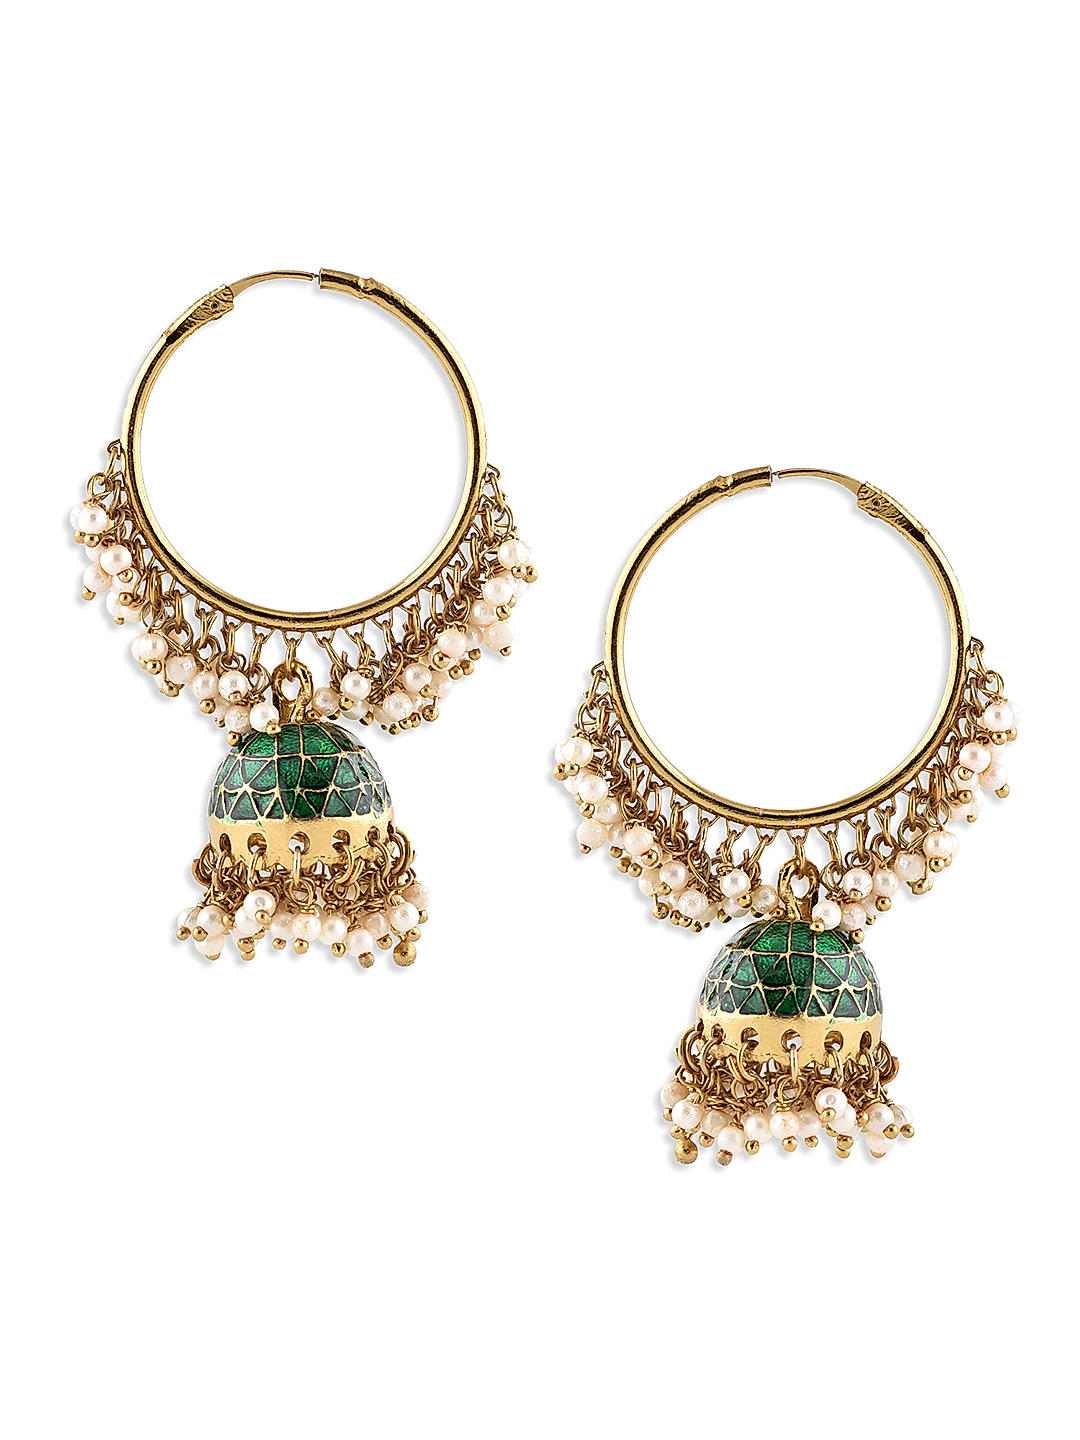 Buy Shoshaa Crescent Dangle Sea green Earrings for women  Indian  Handcrafted Pastel Earrings for wedding festivals  Drop Earrings Jewelry  For Girls And Women at Amazonin